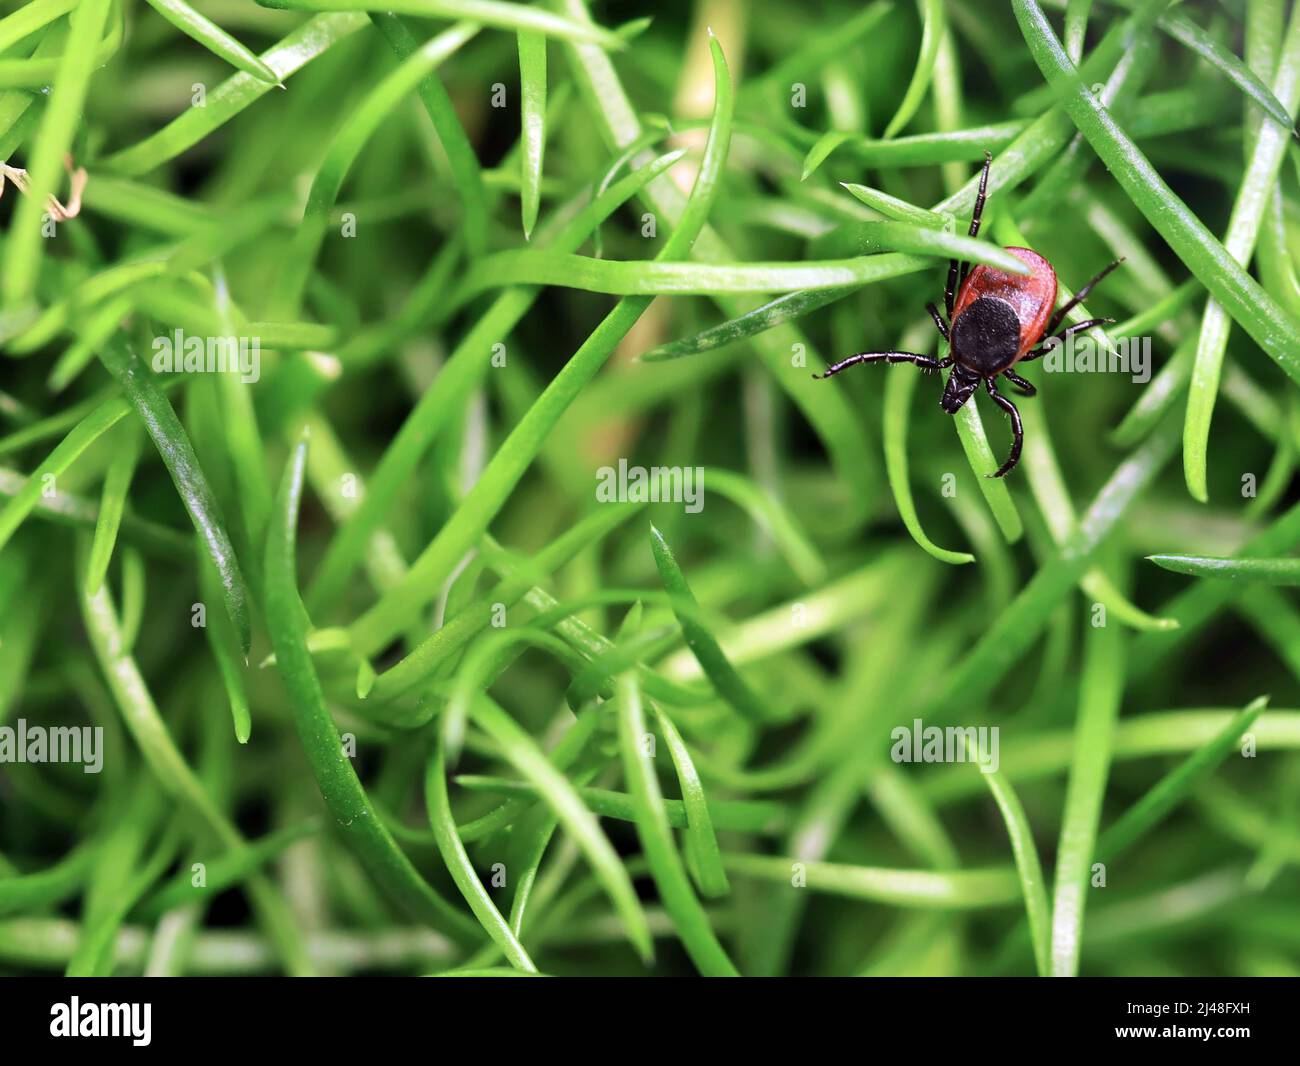 Cervi o Ixodes scapularis strisciando su erba verde, vista dall'alto, Foto Stock